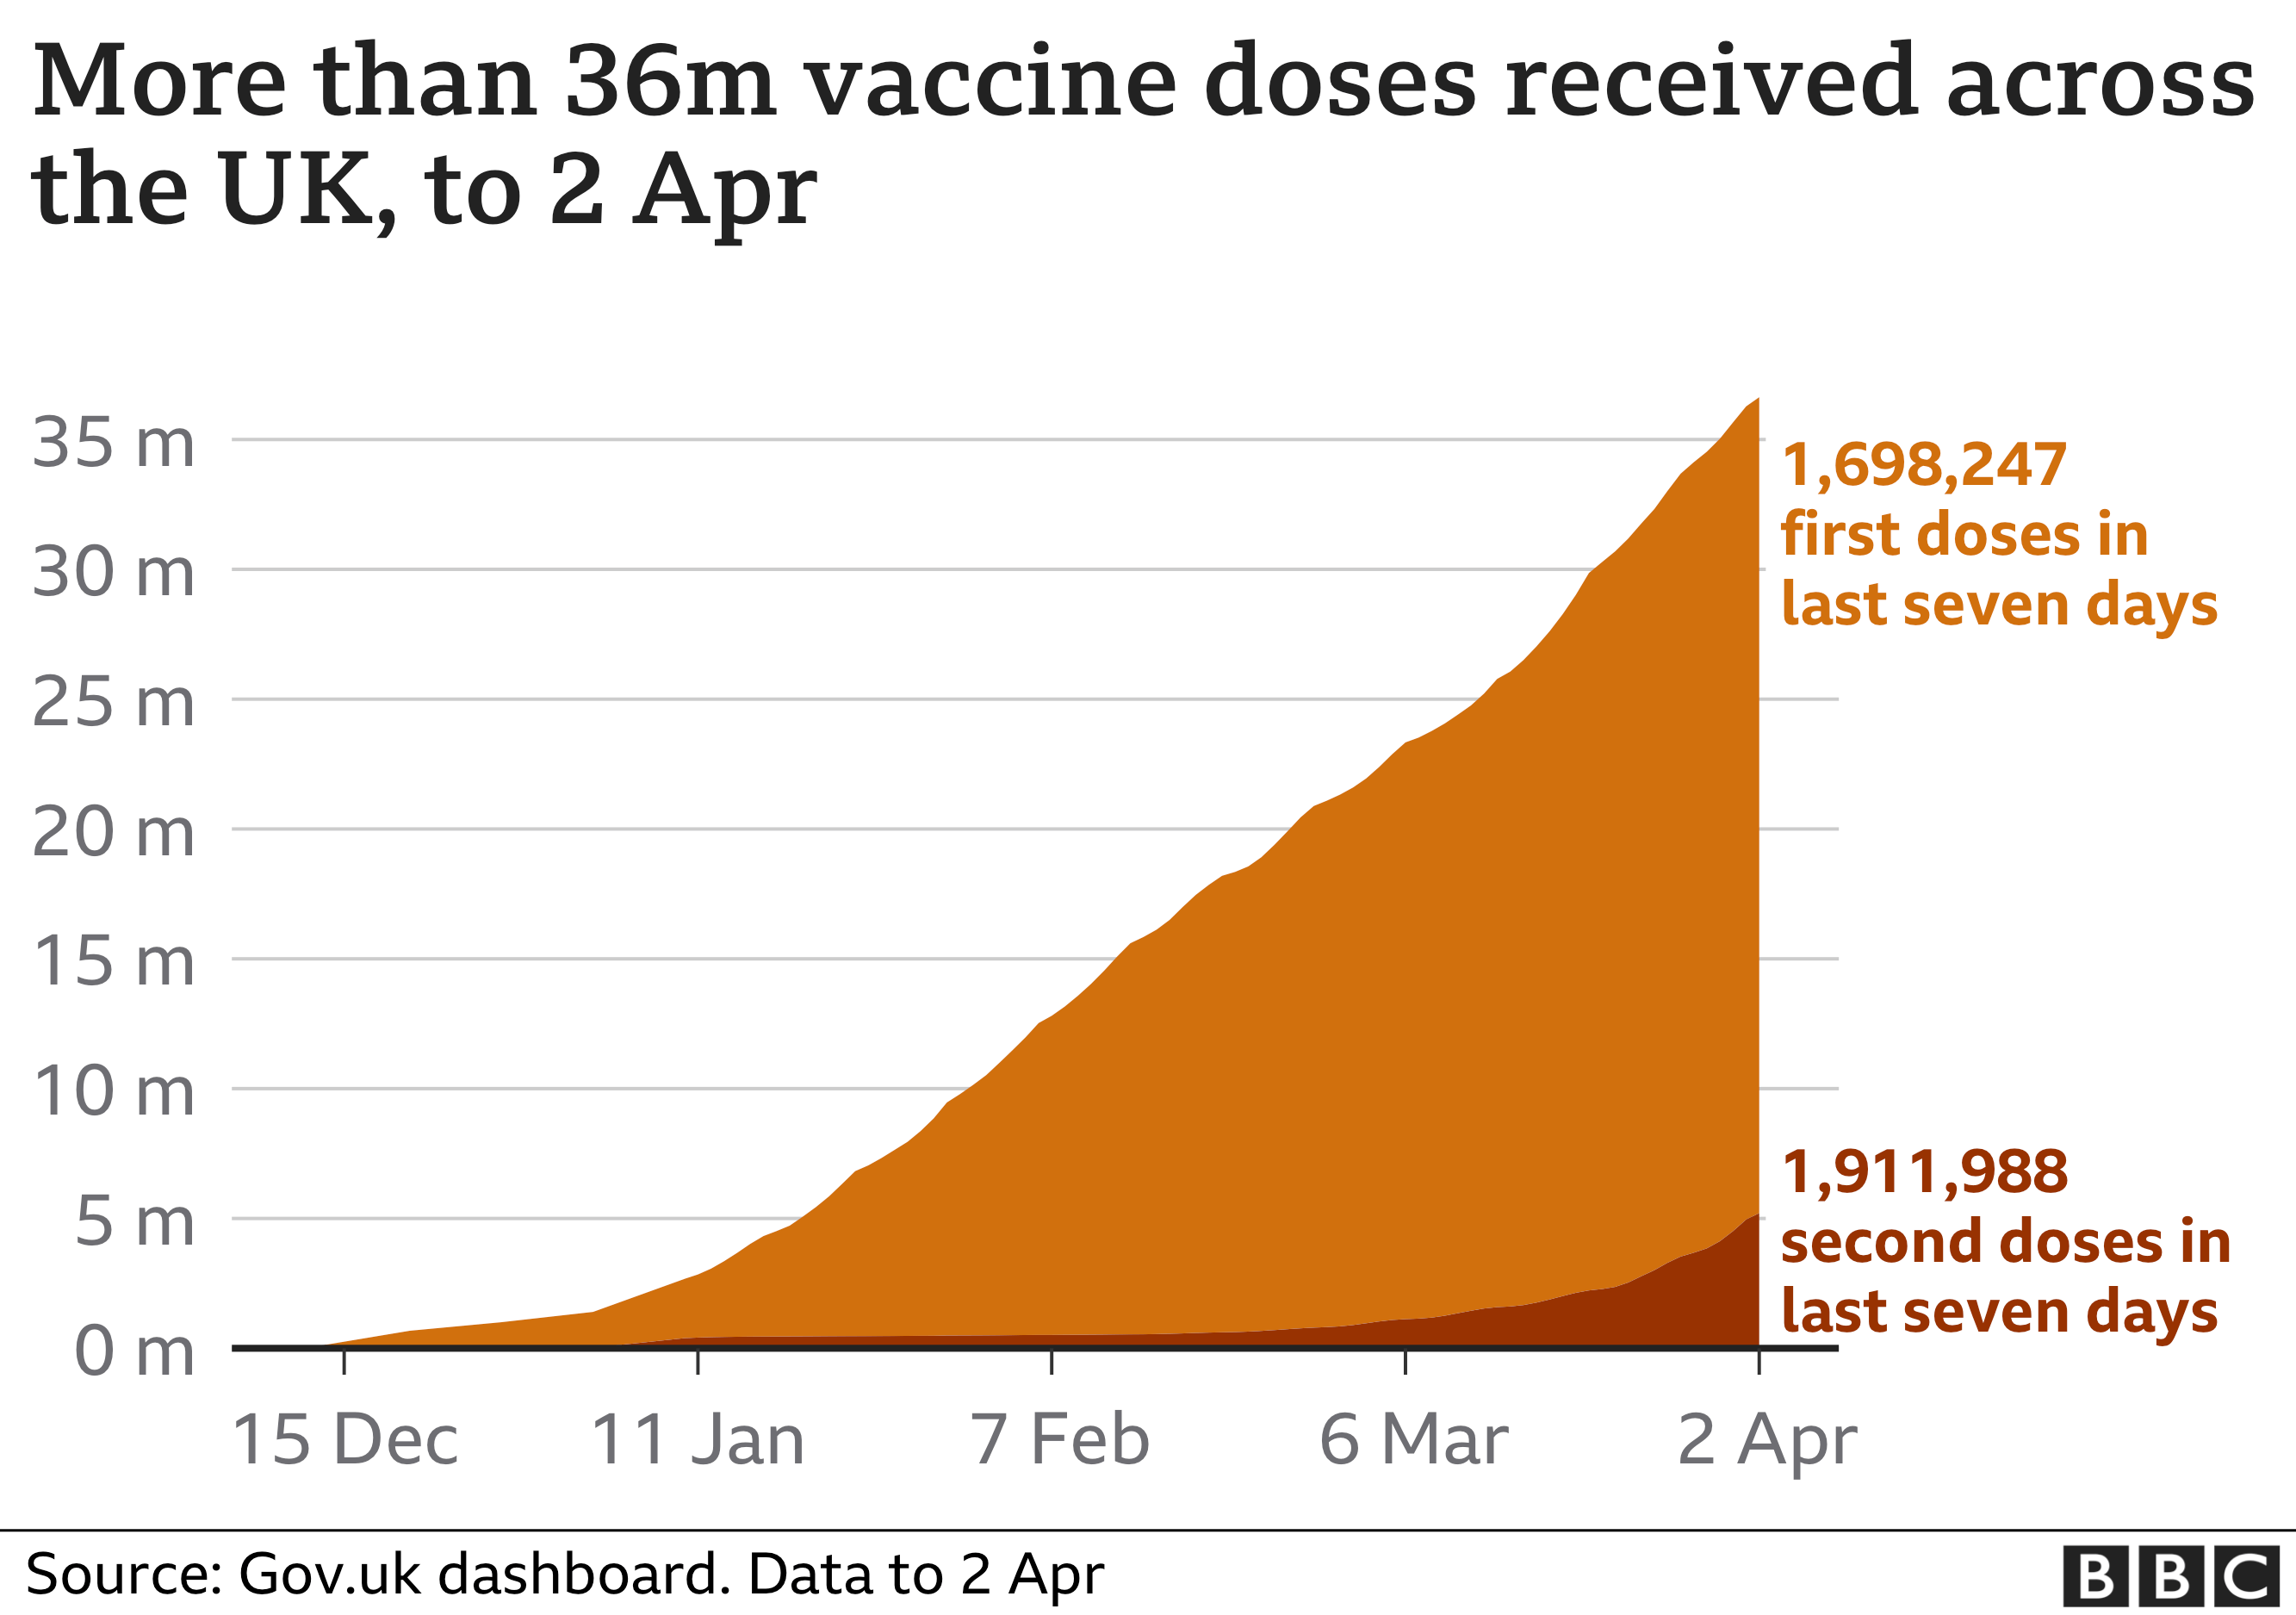 36m UK vaccine doses 2-4-2021 - enlarge